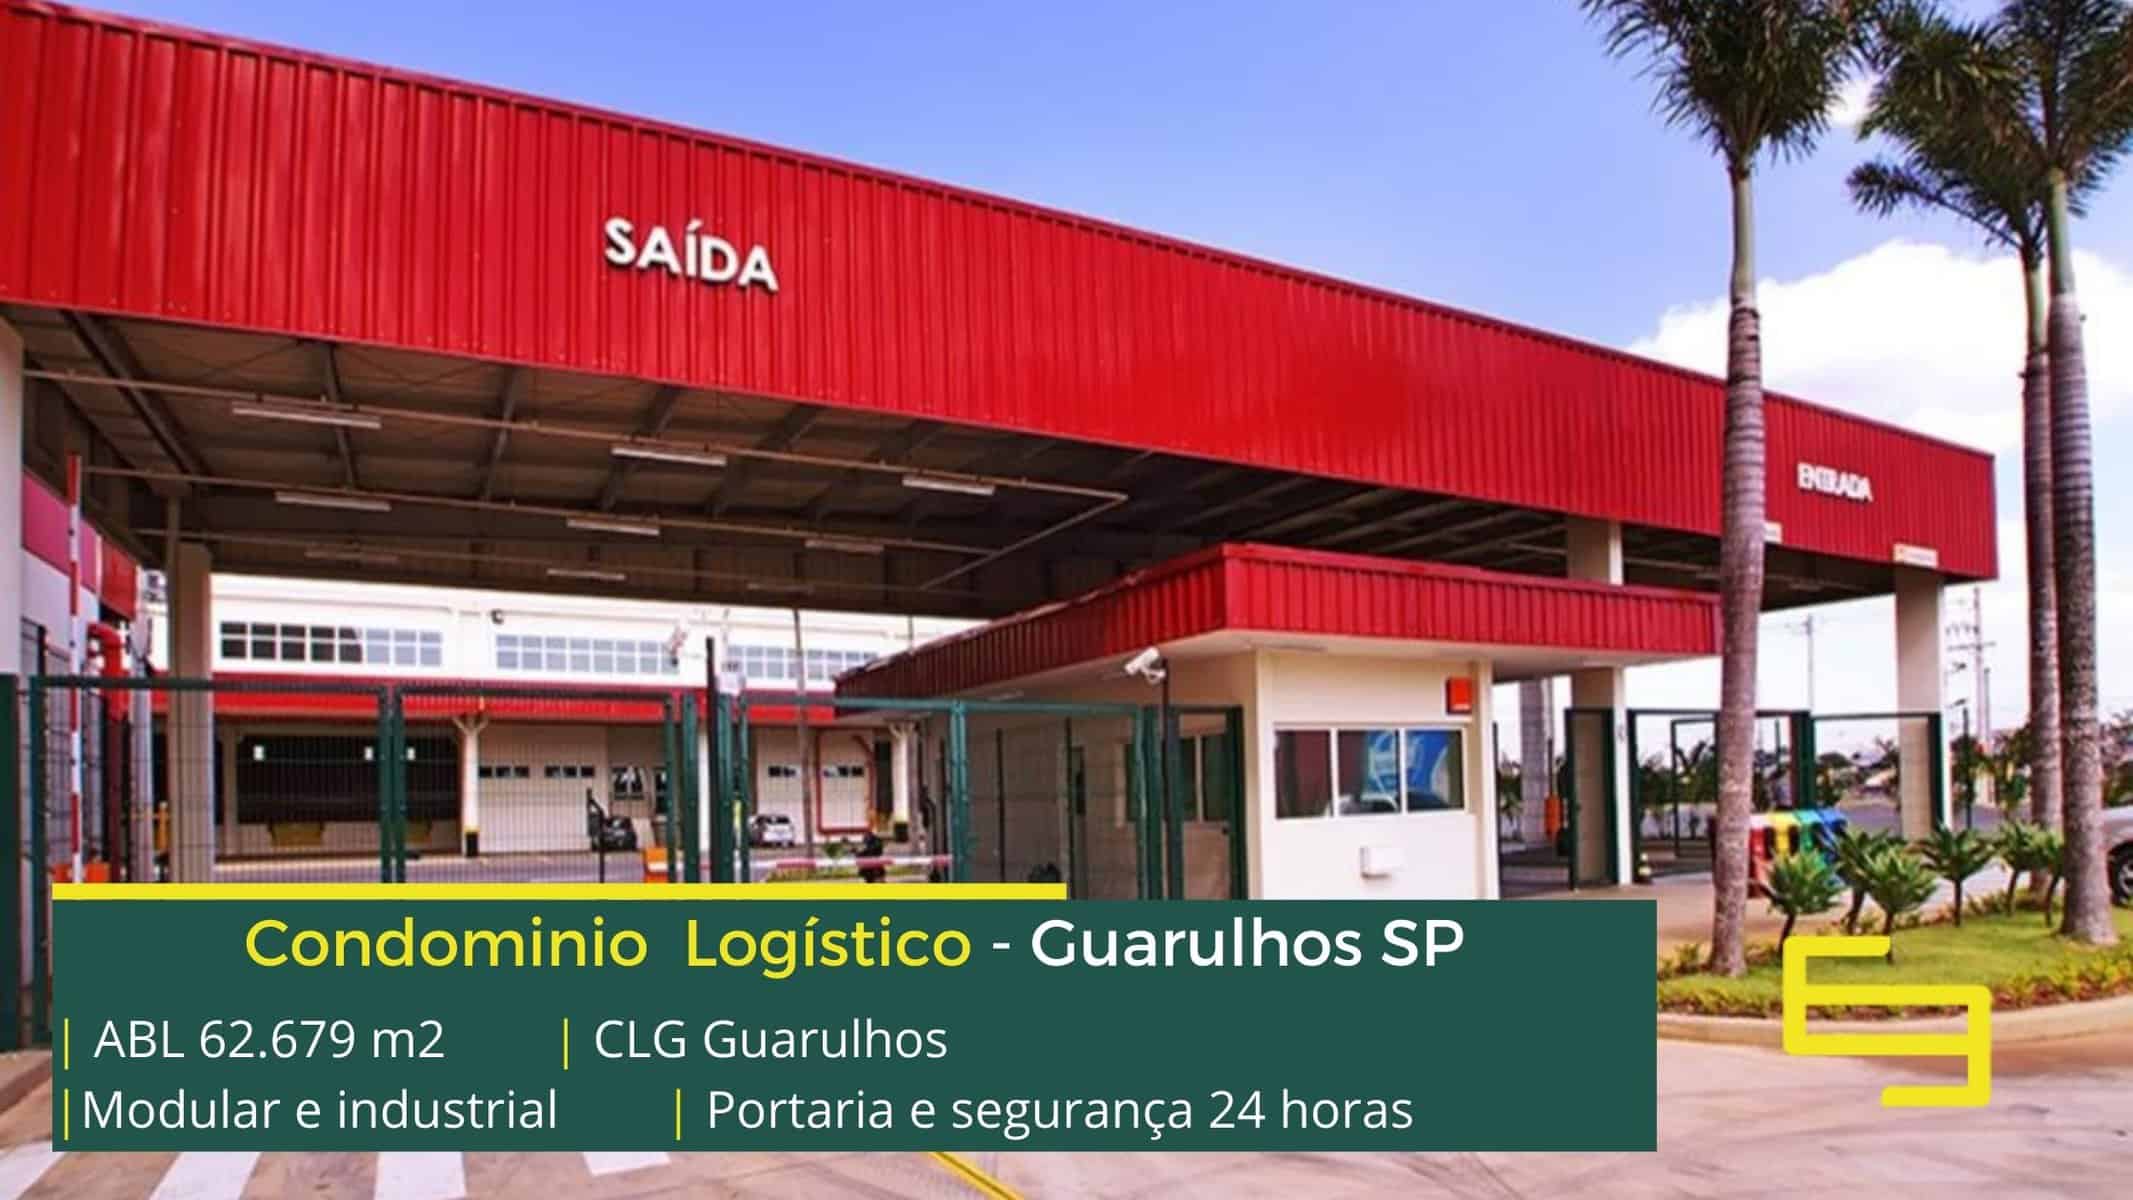 Industrial HGLG Cumbica - Guarulhos SP